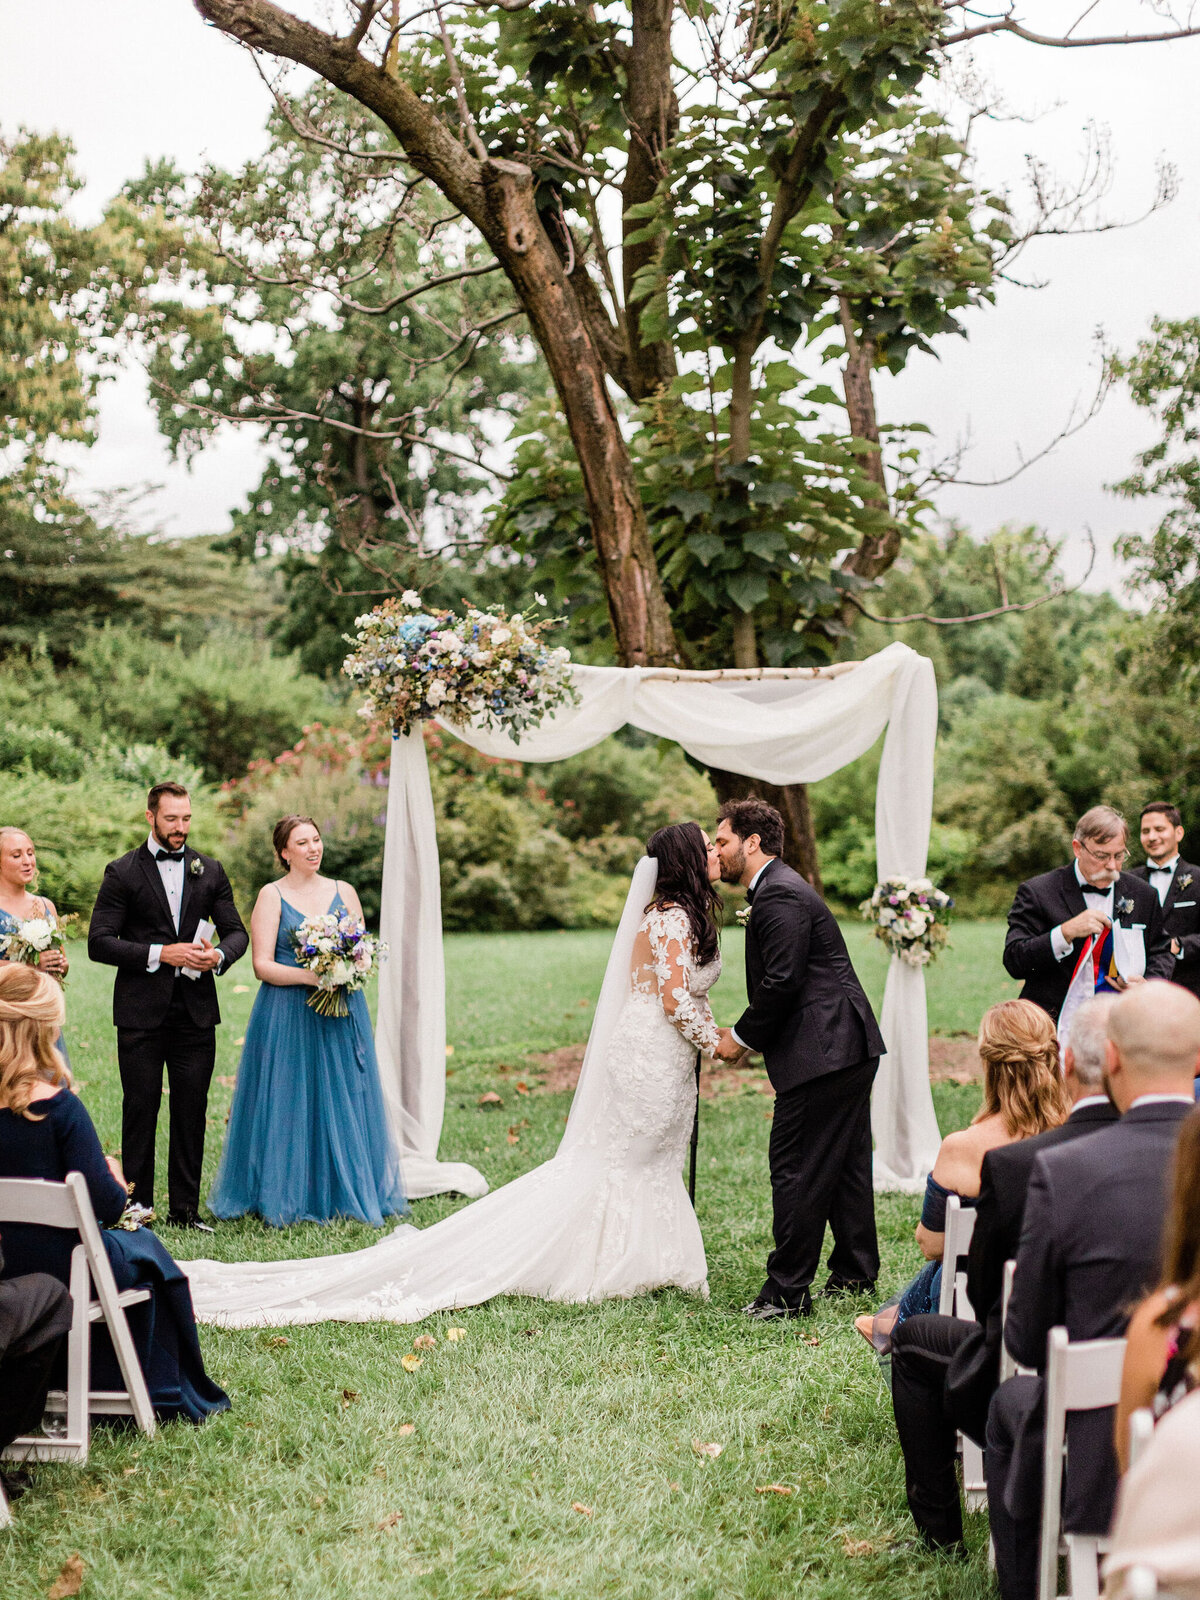 Rachel&Carlos-Fine-Art-Film-Wedding-Photographer-Brooklyn-Botanical-Garden-18